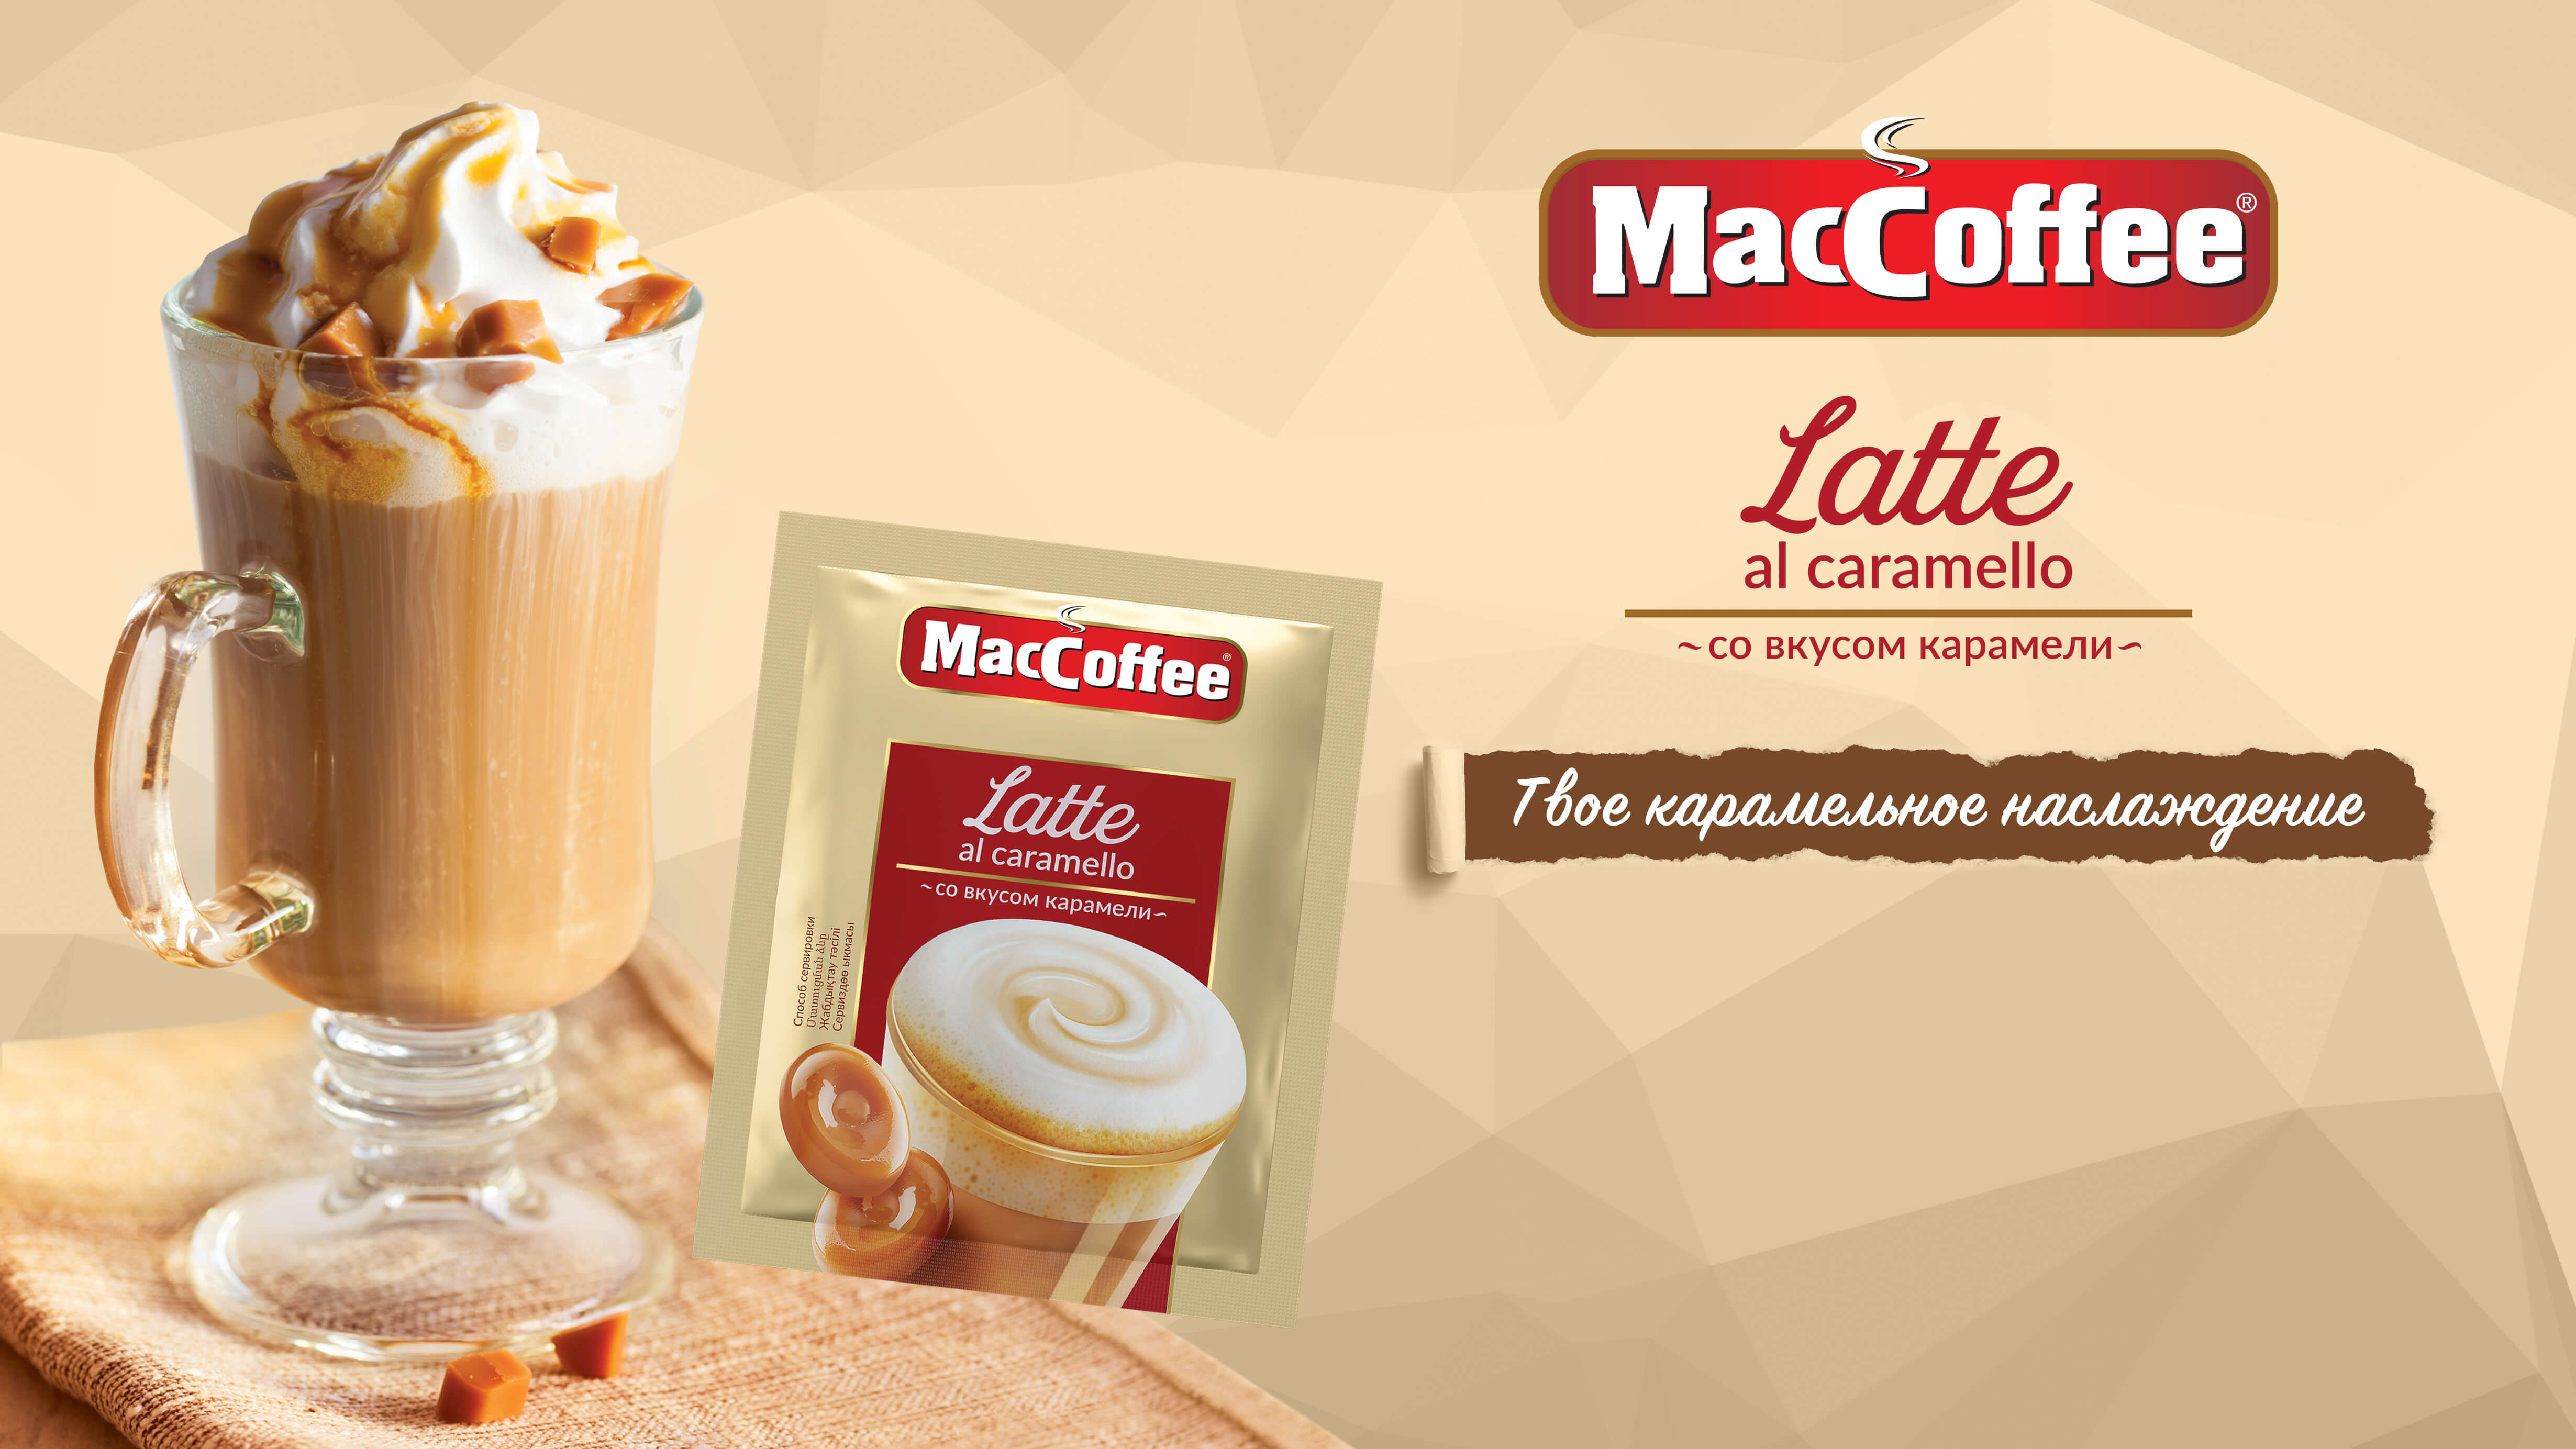 MacCoffee Latte Al Caramello – Our caramel flavoured latte.